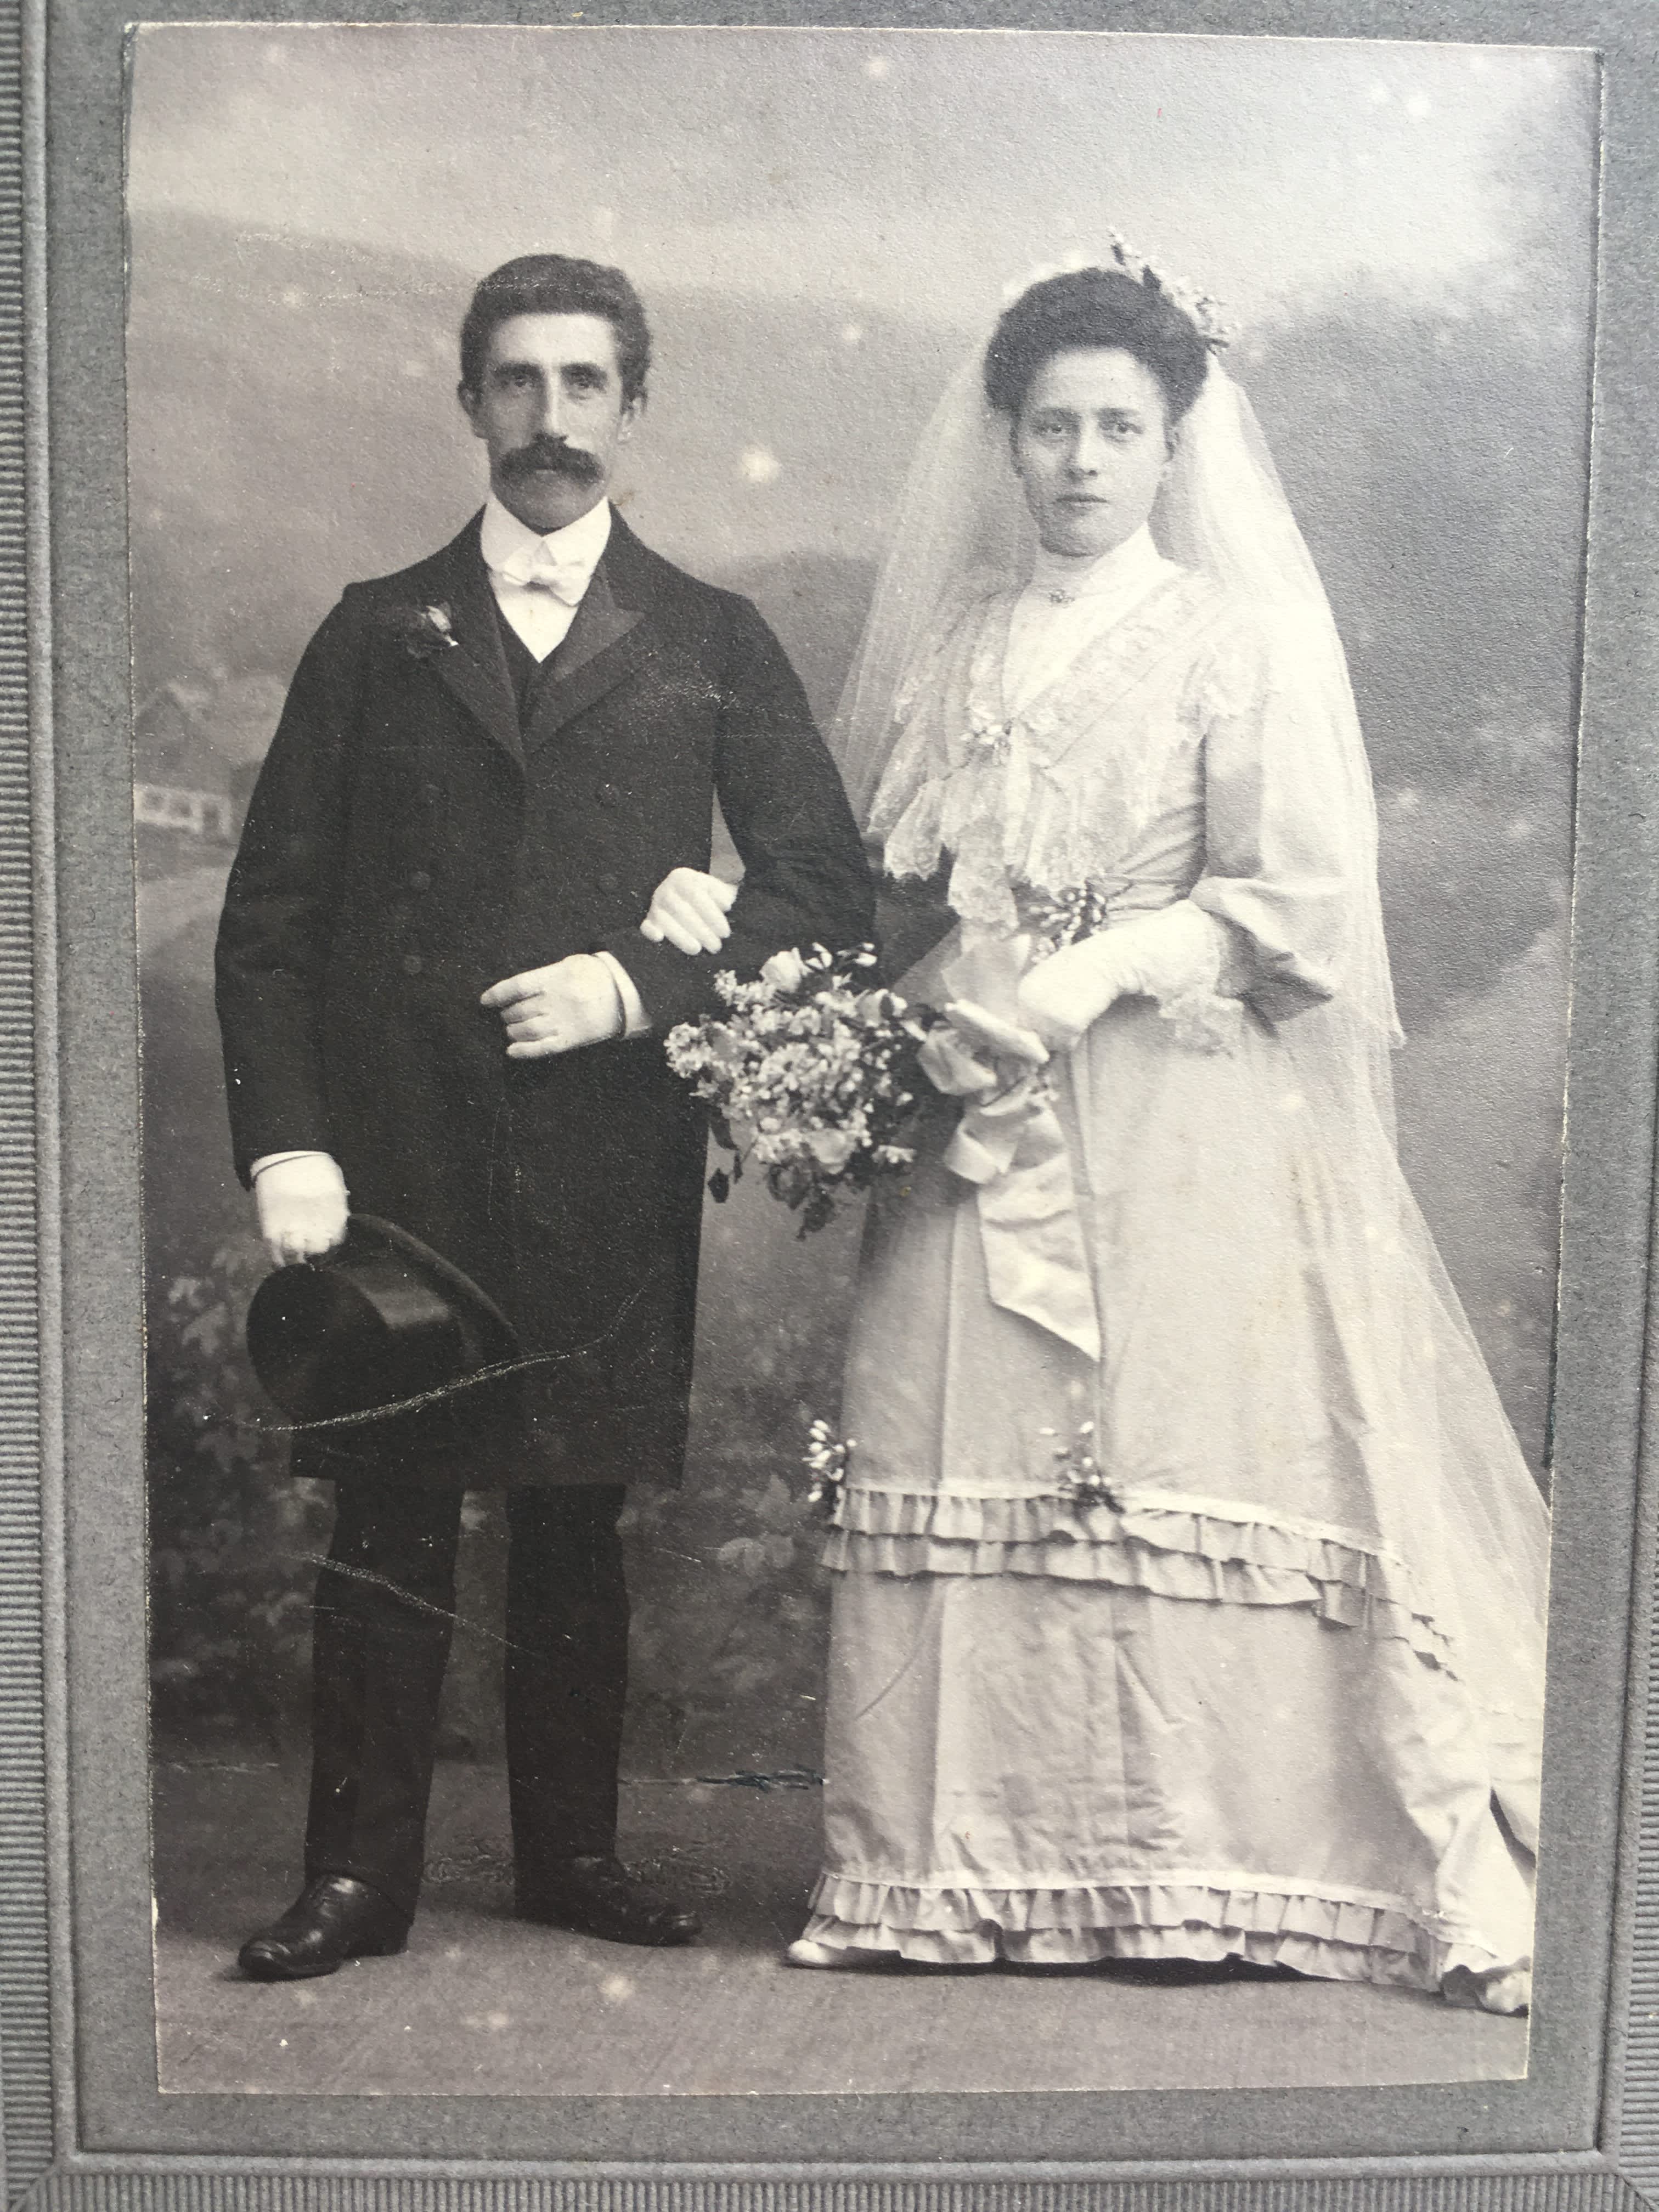 Tobias Johan & Catriena Taalkea Snel (Diekmann) at their wedding in 1908.